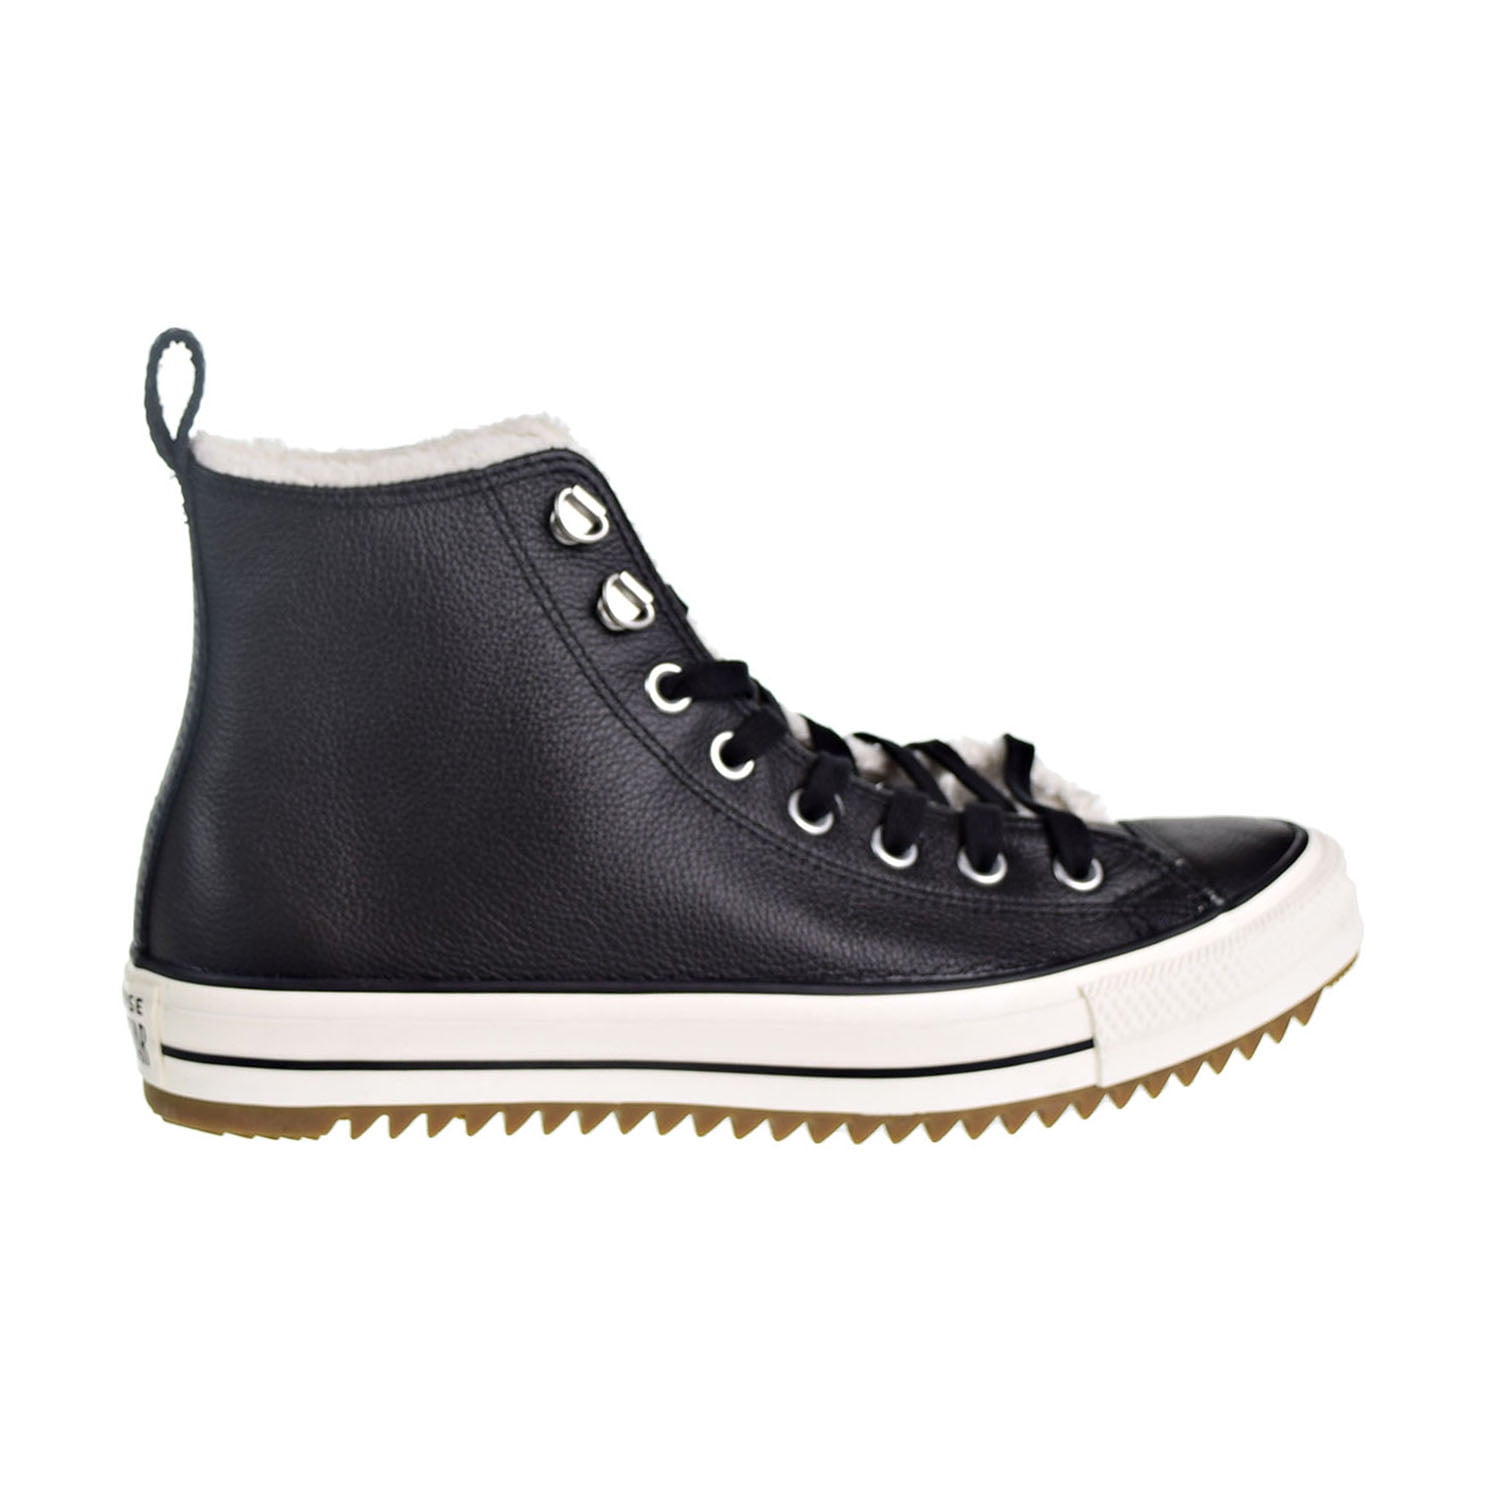 Converse Chuck Taylor All Star Hiker Boot Men's/Big Kids Shoes  Black-Egret-Gum 161512c لبس الطيار